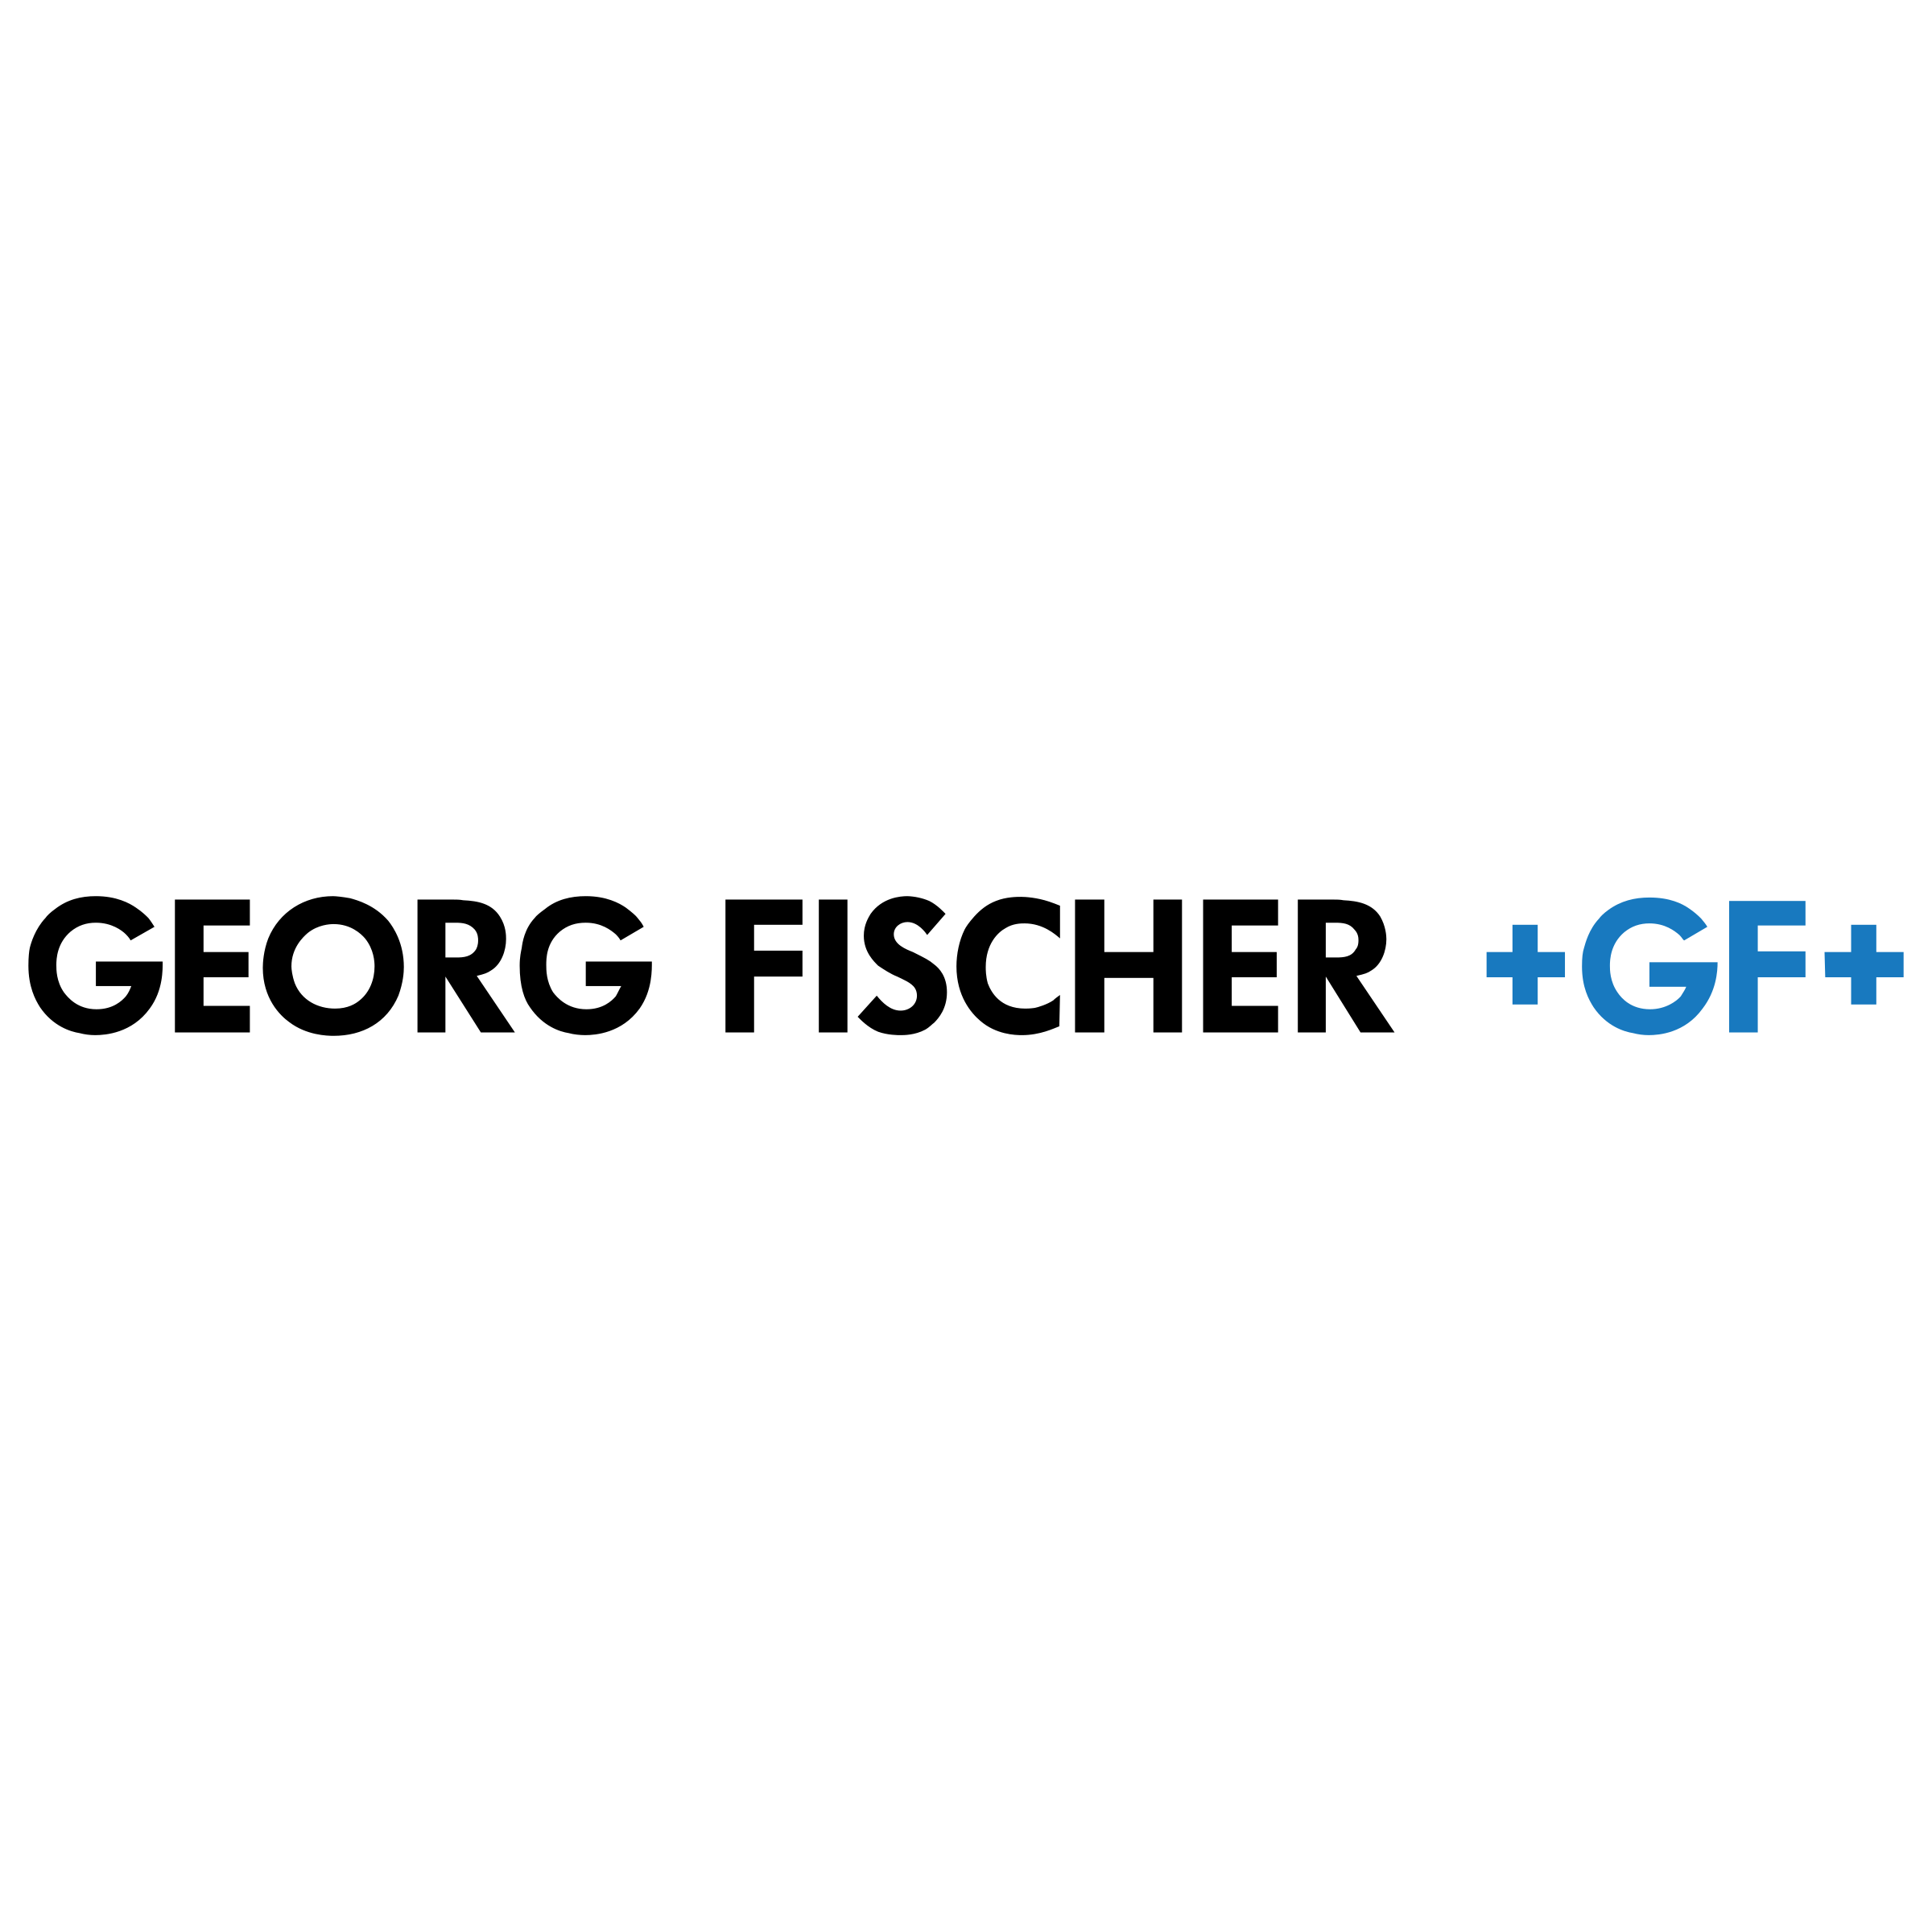 georg-fischer-logo-png-transparent